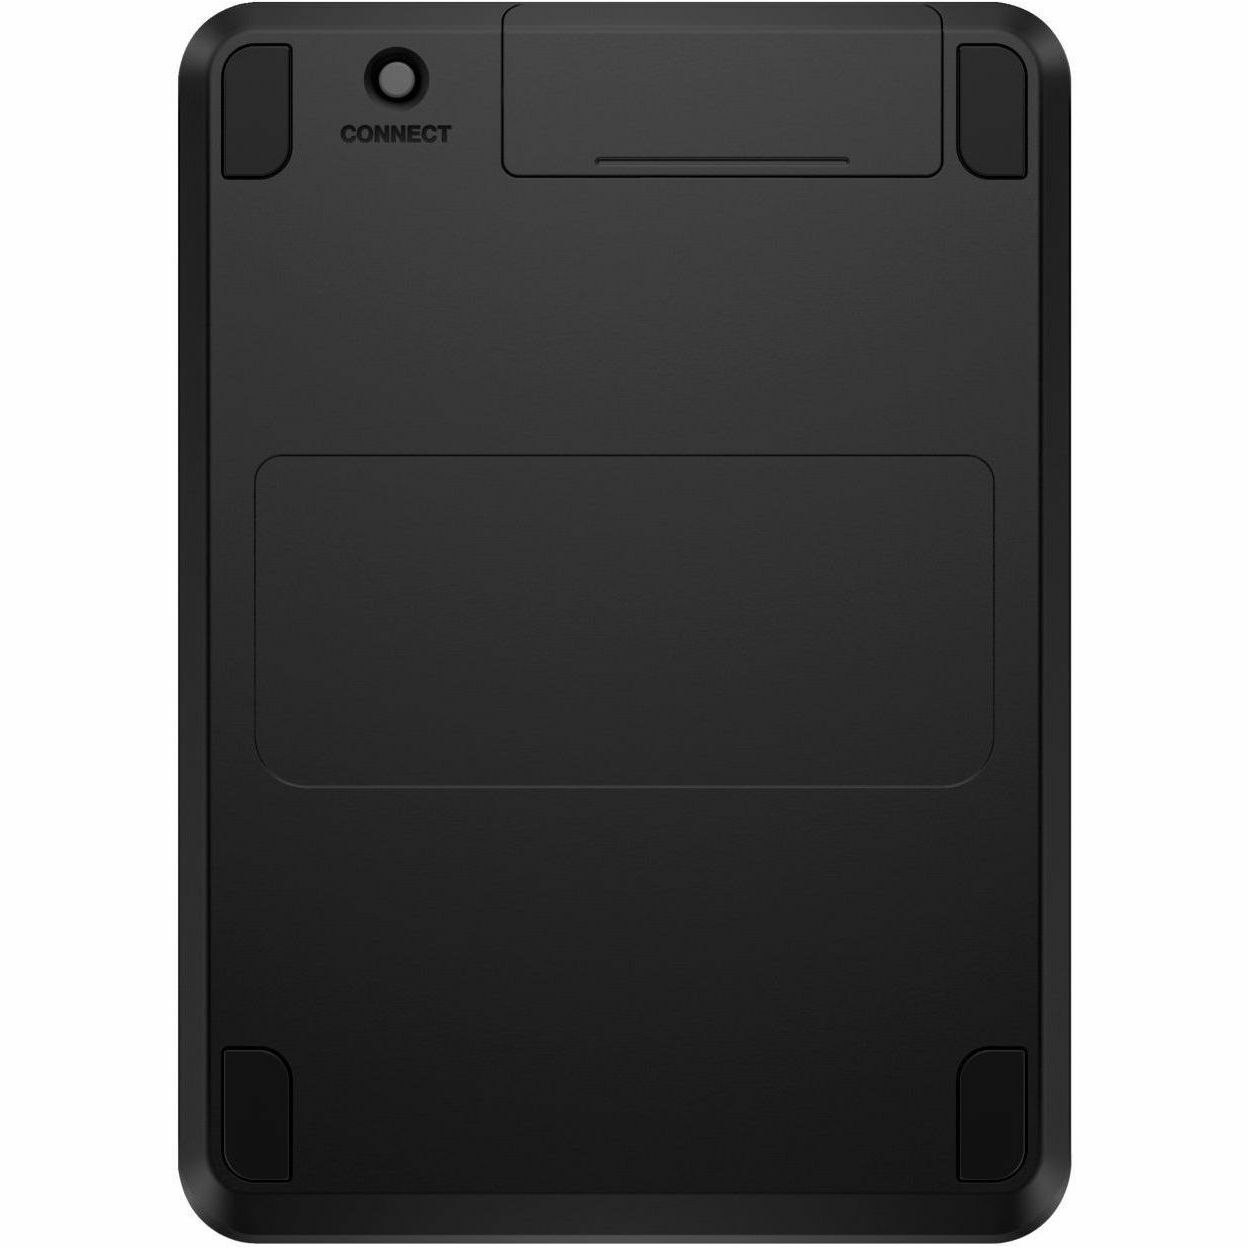 HP 435 Keypad - Wireless Connectivity - Black